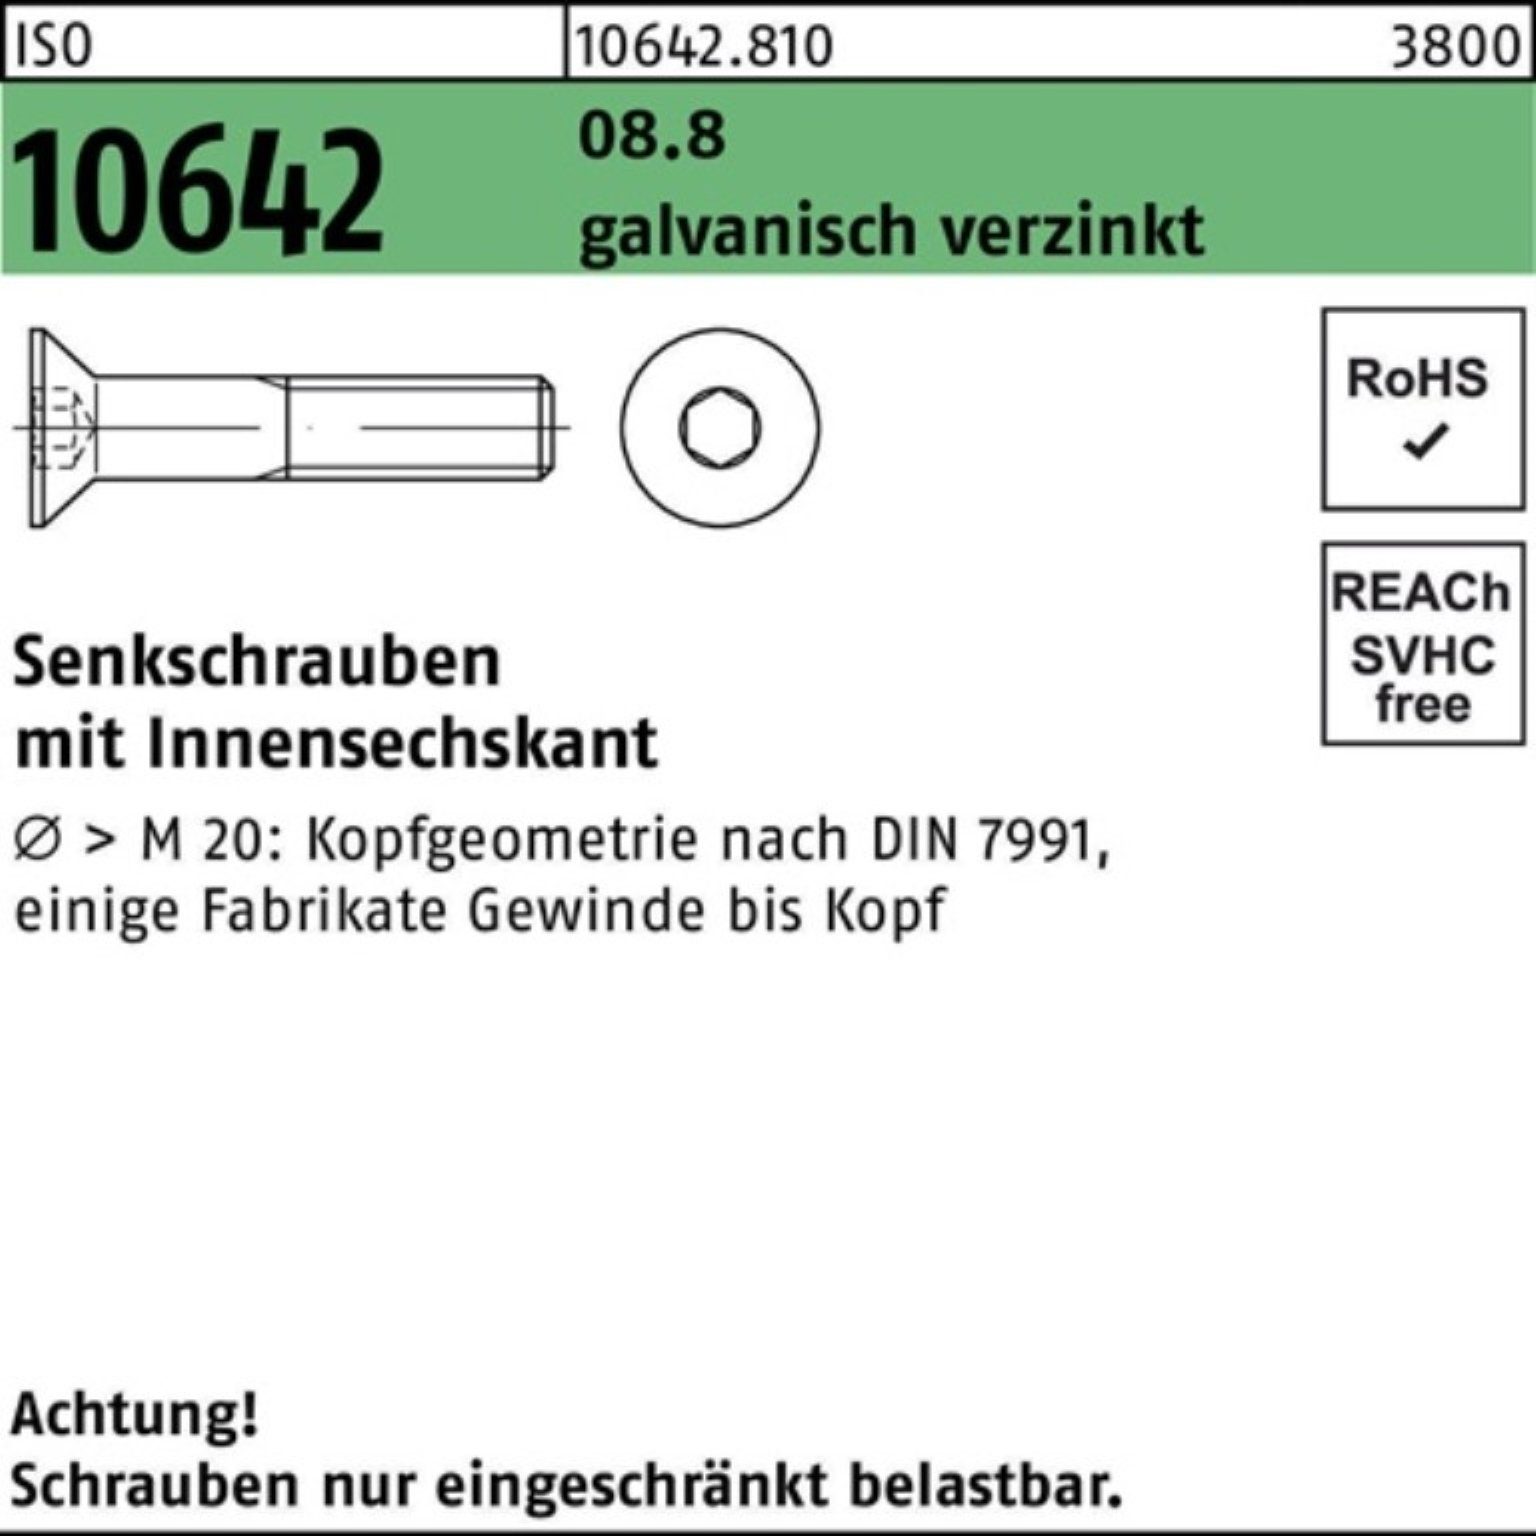 M3x ISO 500 8.8 Senkschraube Senkschraube 10642 galv.verz. Reyher 20 Innen-6kt 500er Pack